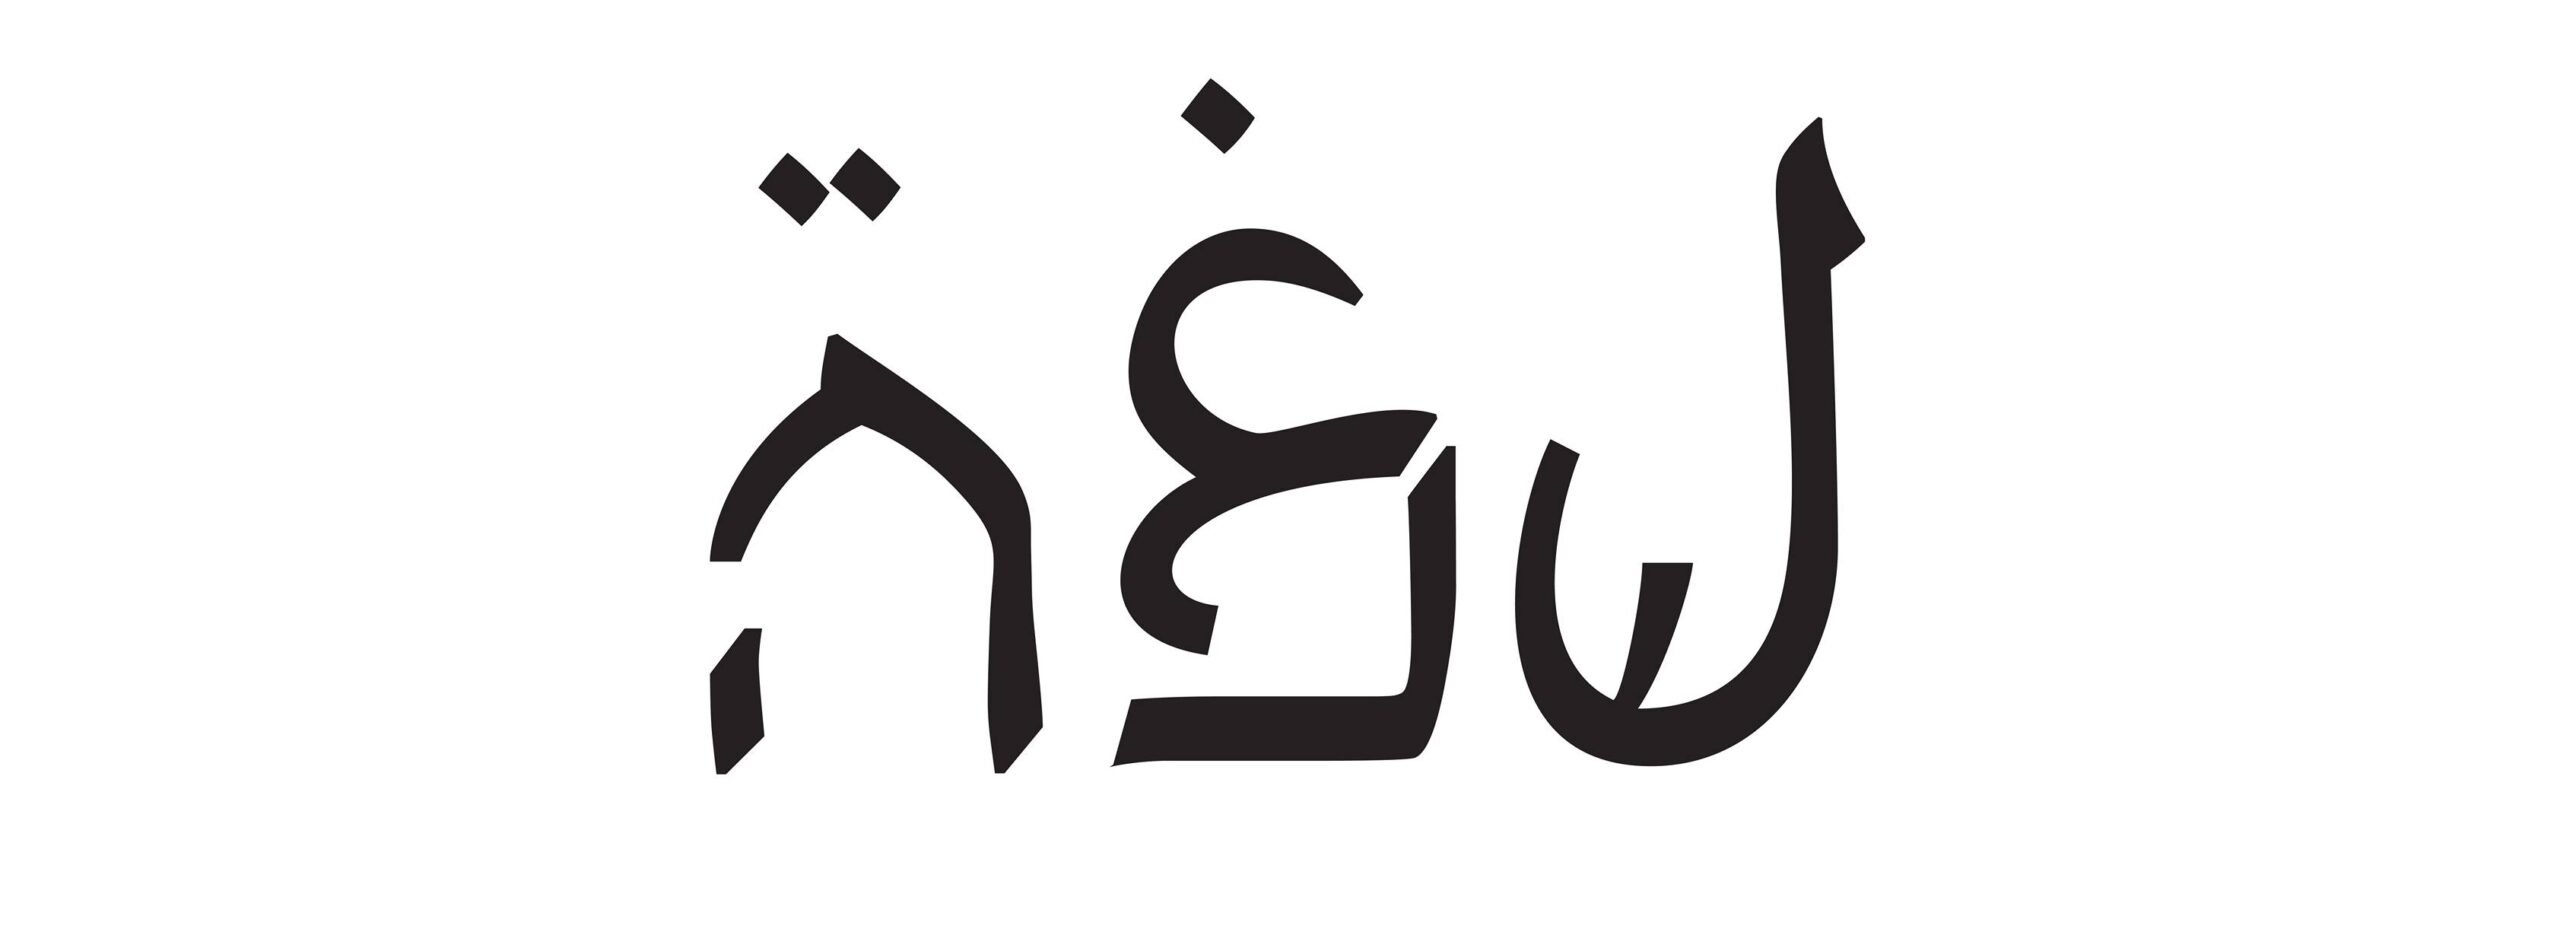 Hem Arapça Hem İbranice Bir Font: Ararvrit